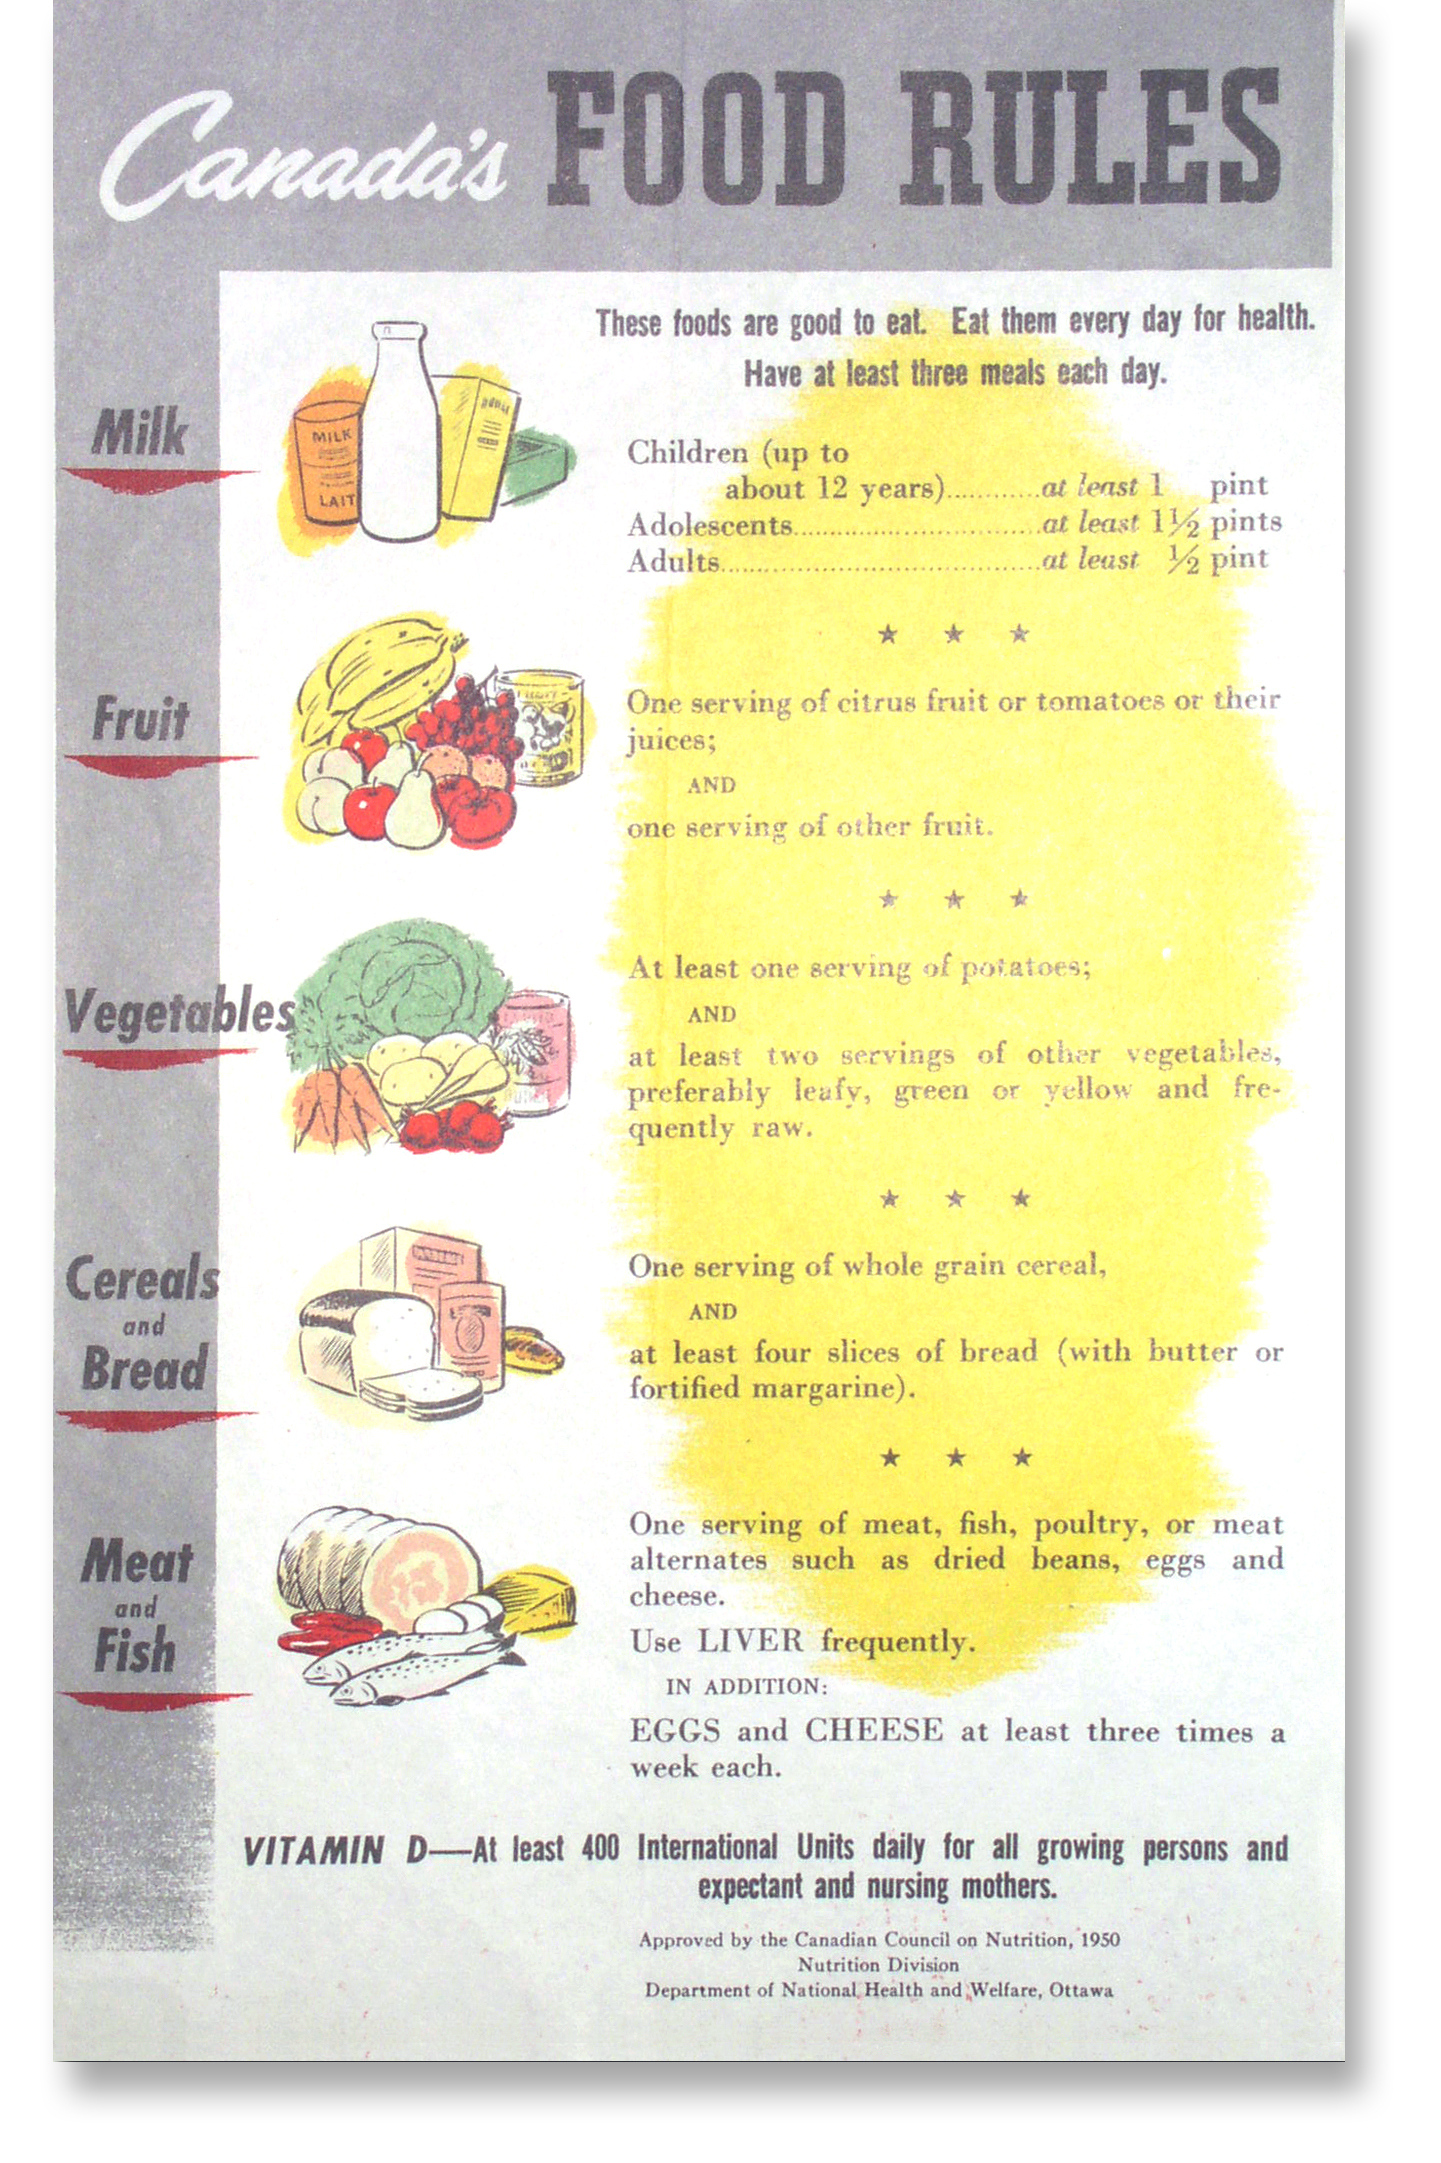 Printable Worksheets For Teachers K 12 Teachervision Canada Food 